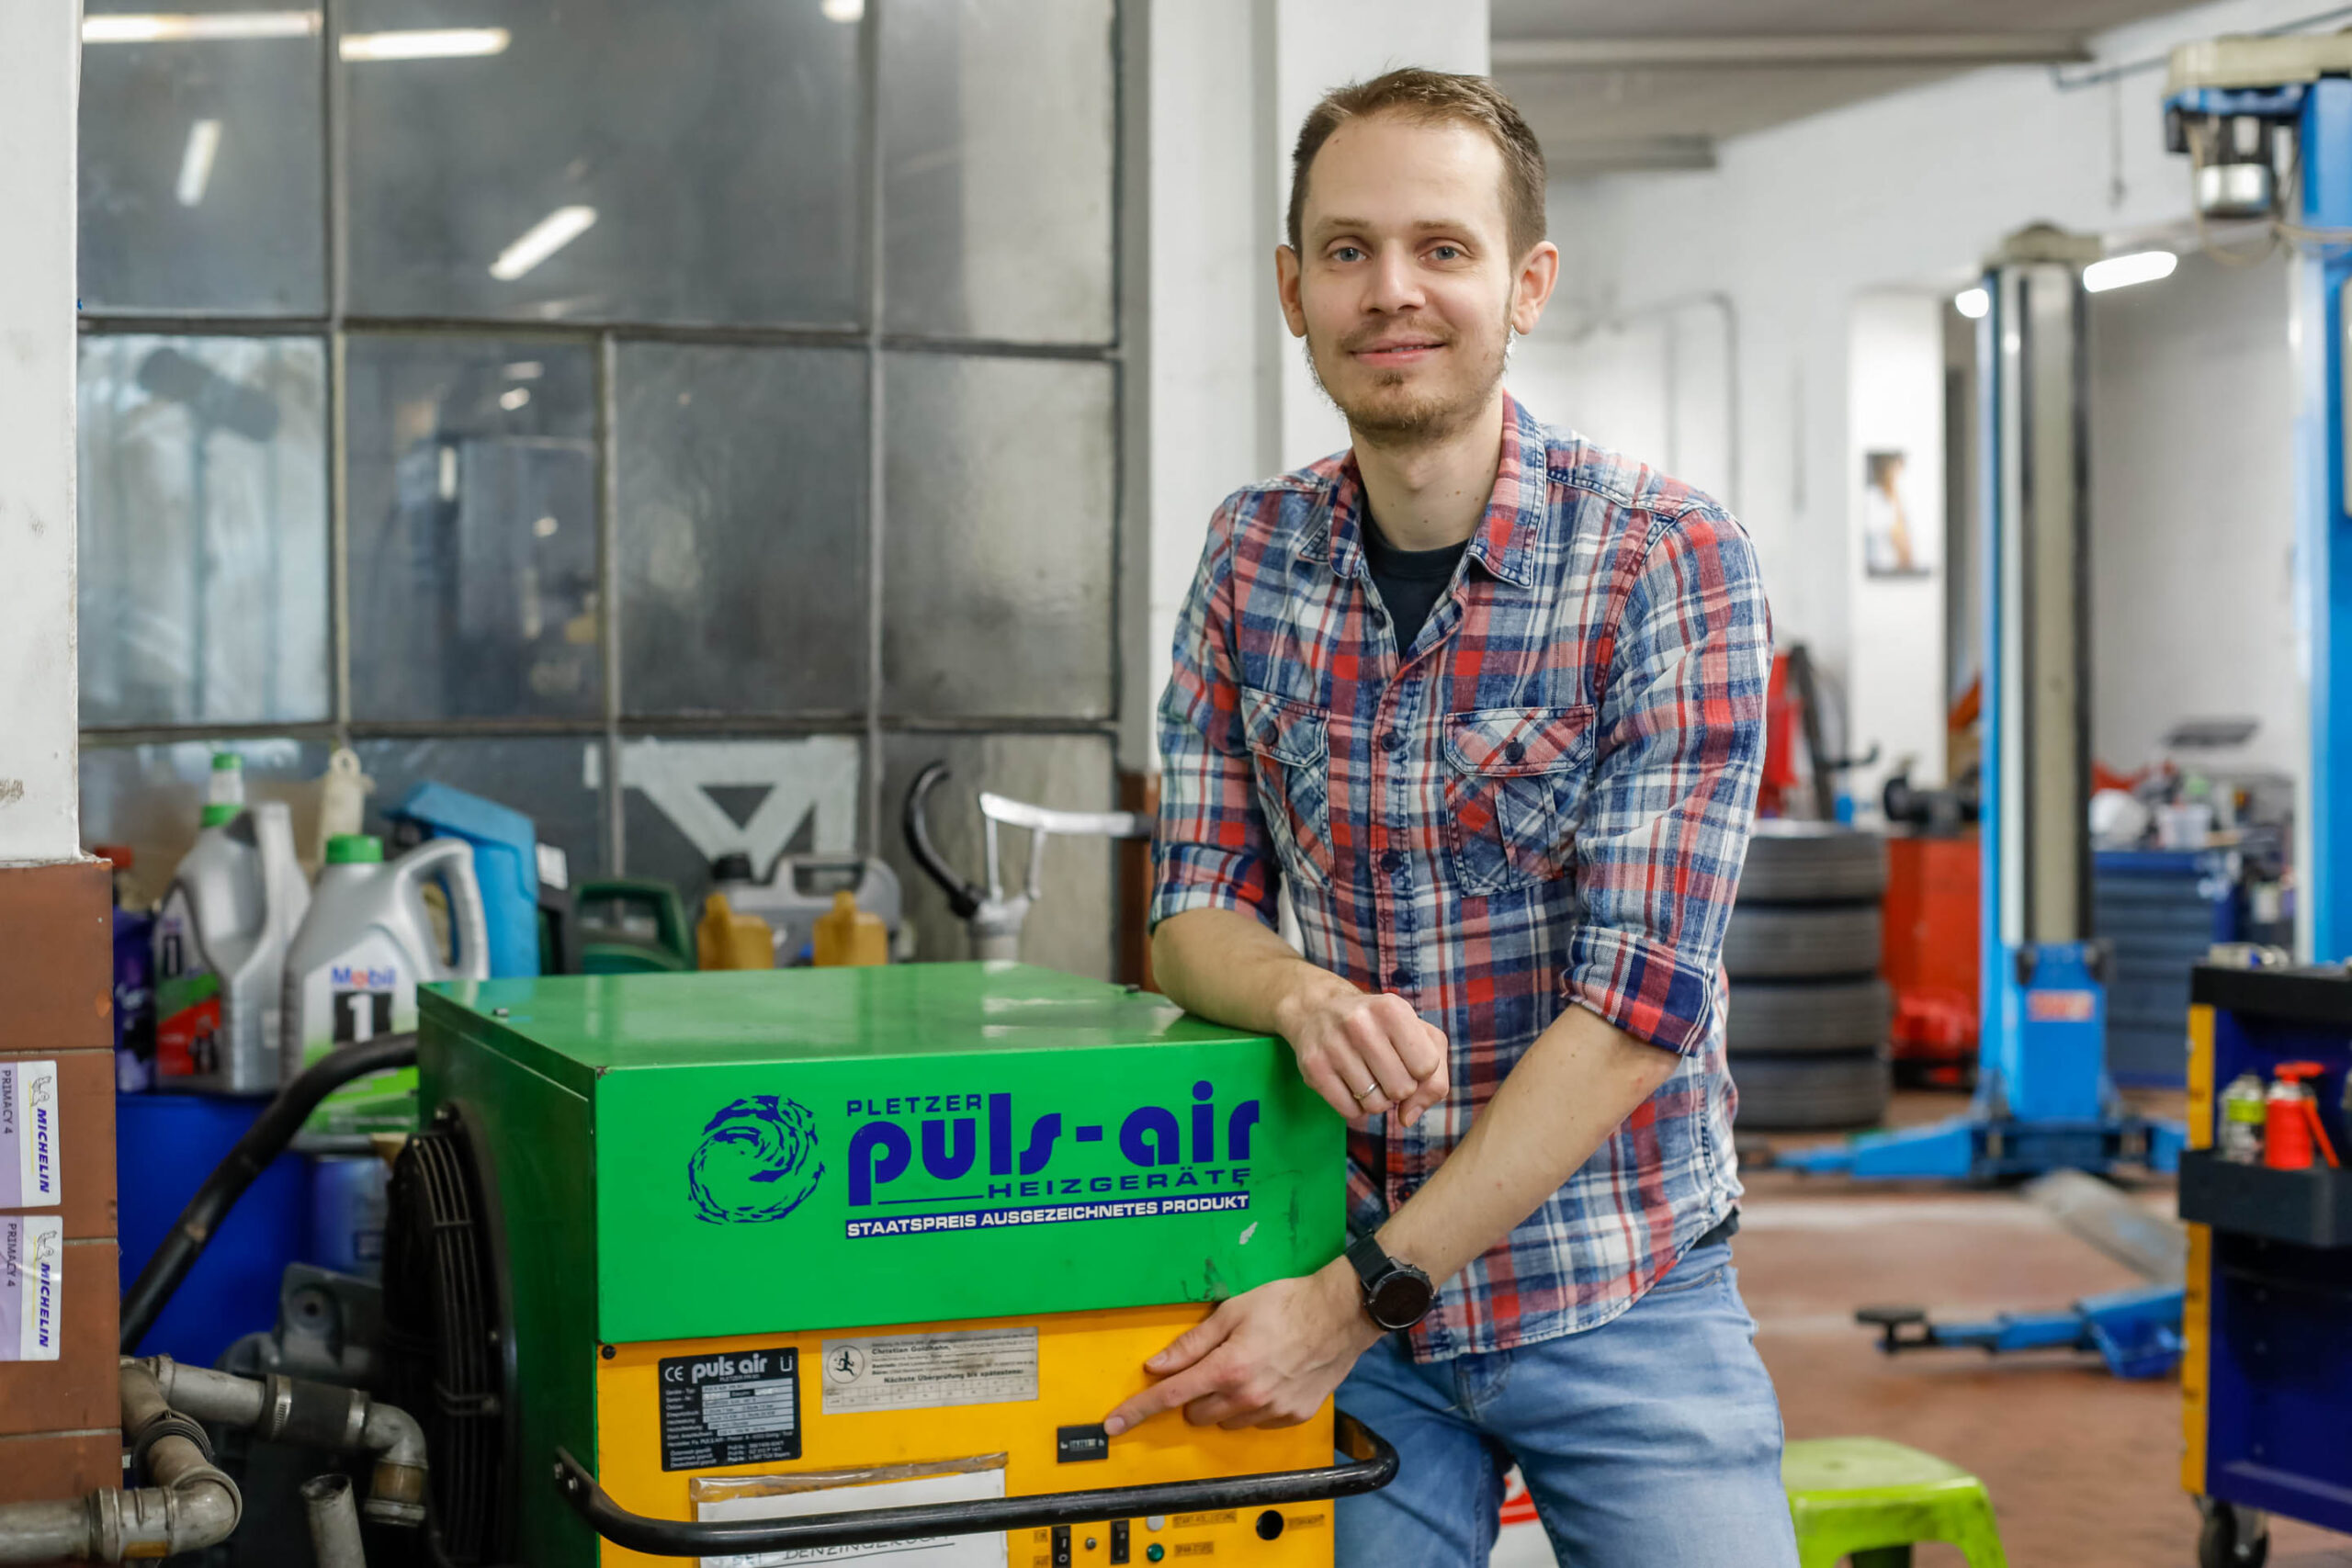 Managing director of Autohaus Schmuck in Leobersdorf Phillip Steiner with the Puls-air heater